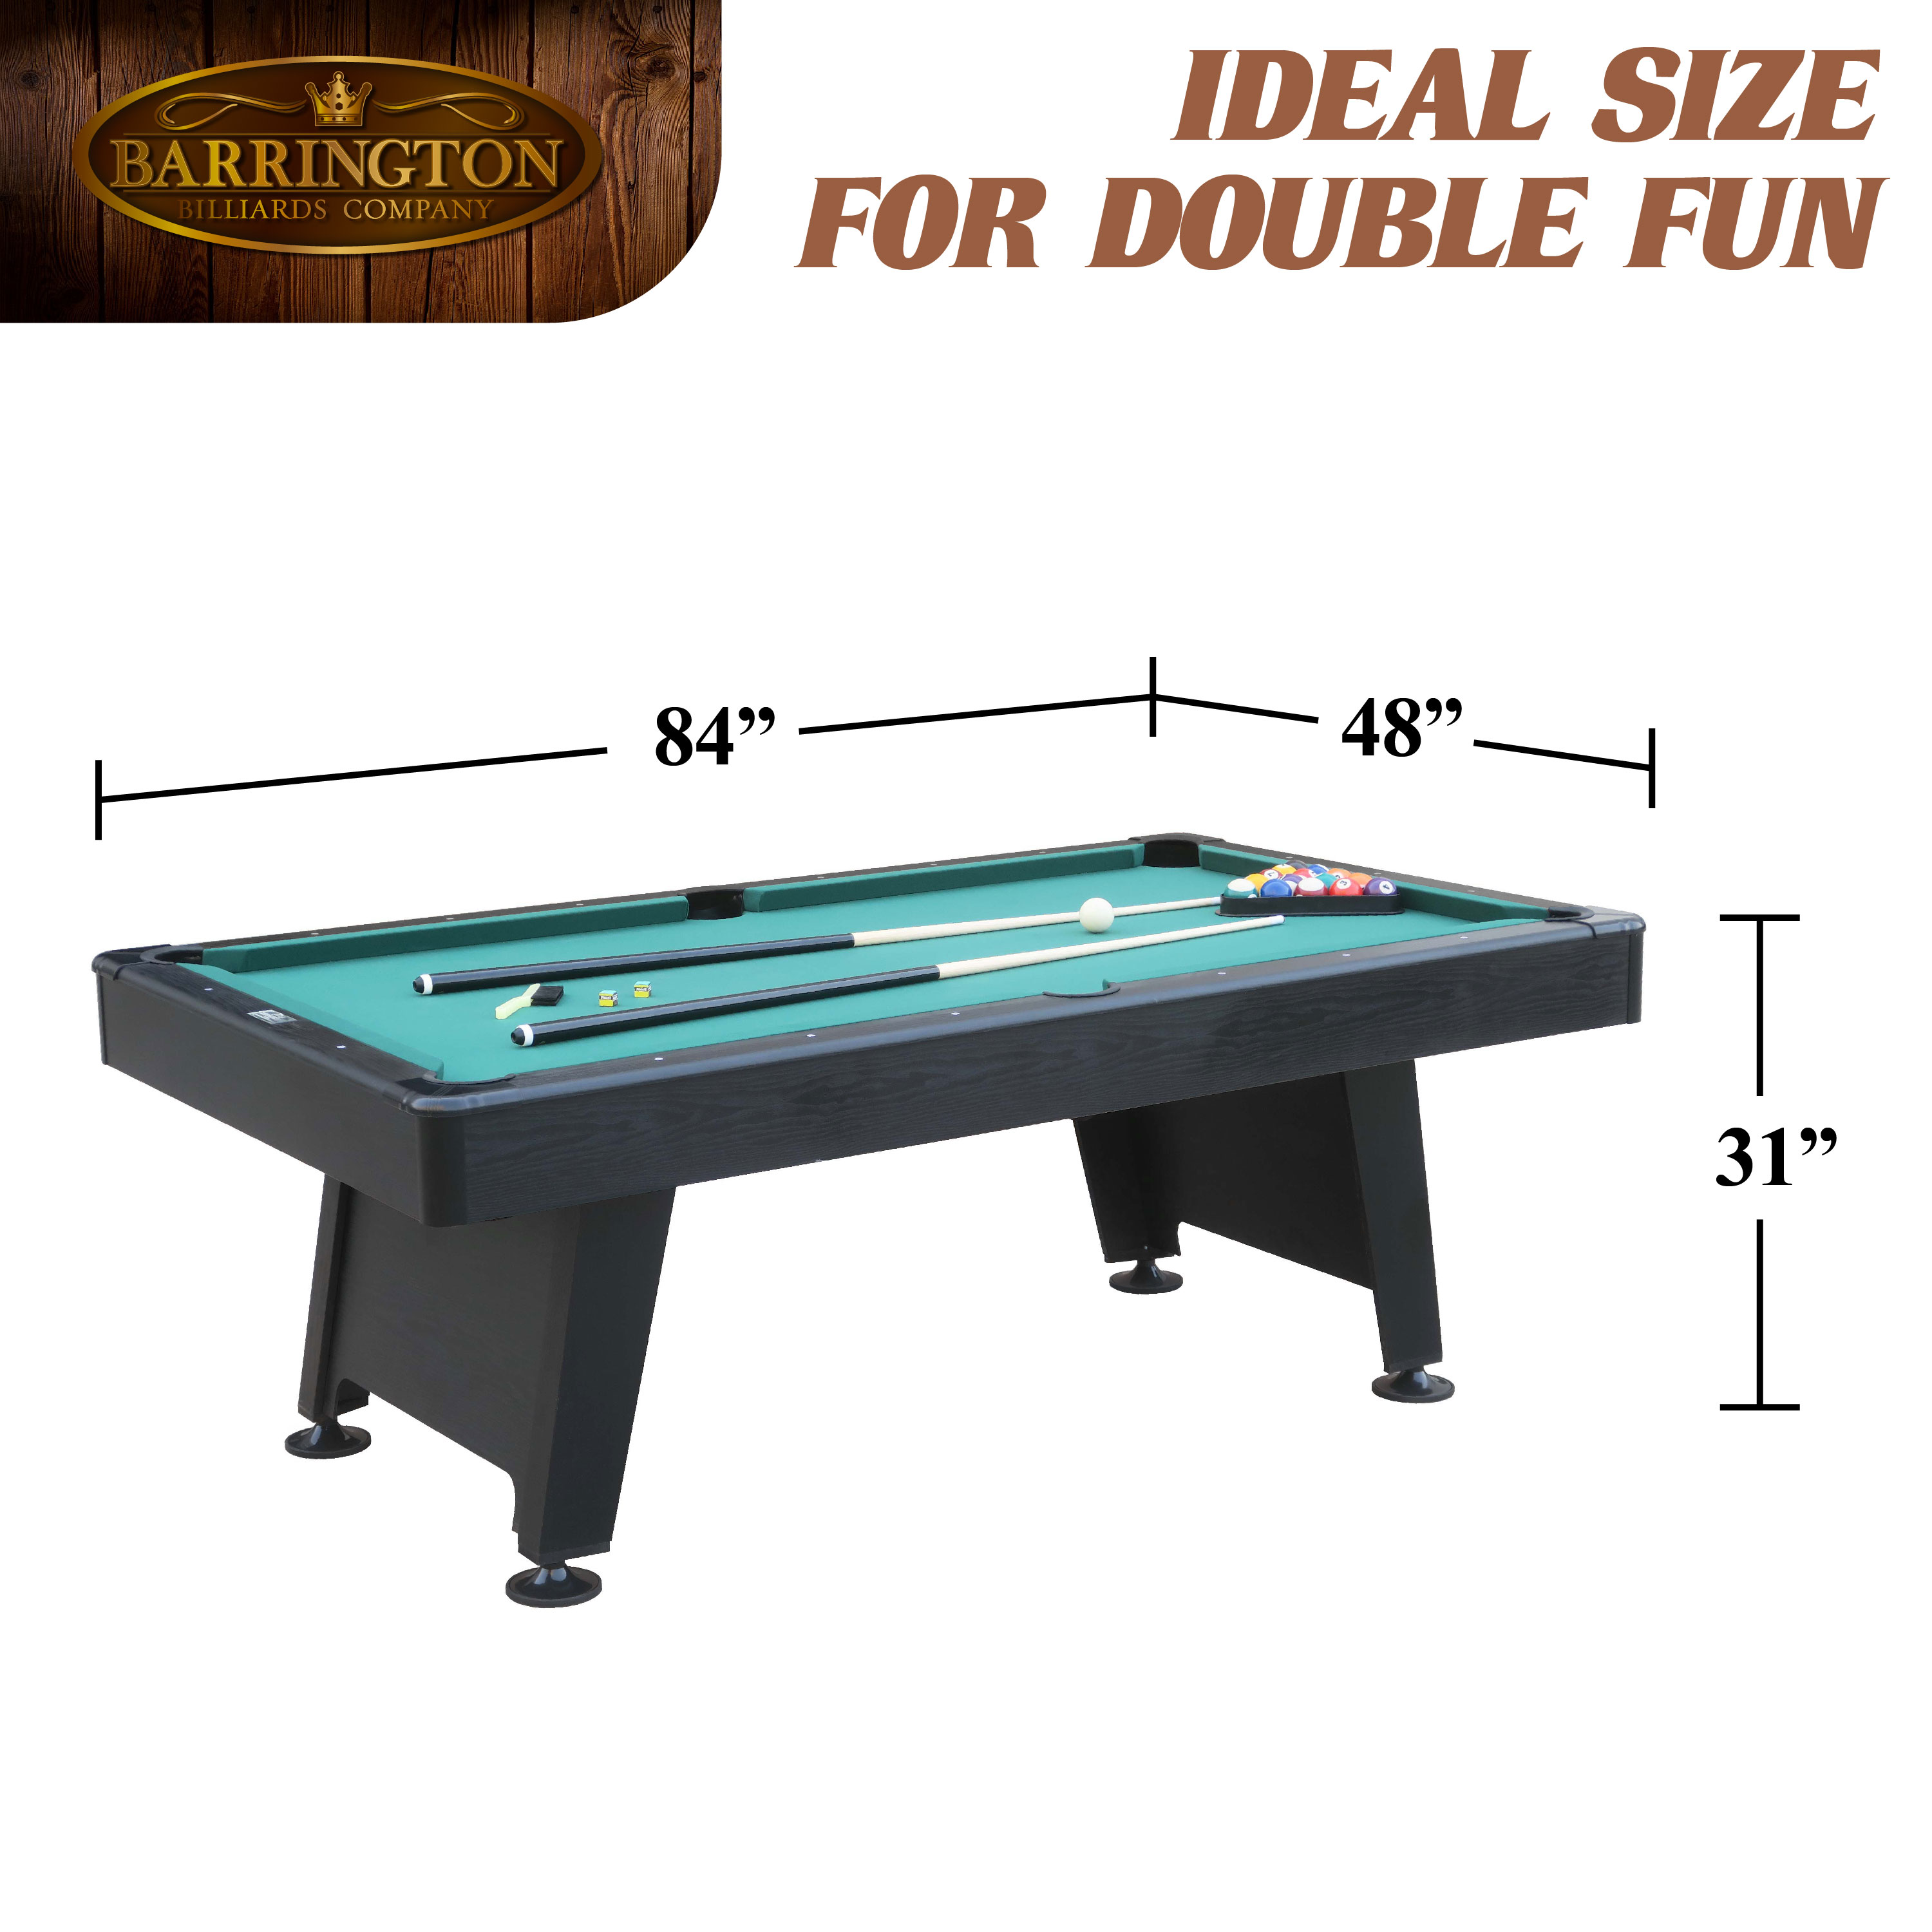 Barrington Billiard 84" Arcade Pool Table with Bonus Dartboard Set, Green, New - image 3 of 12